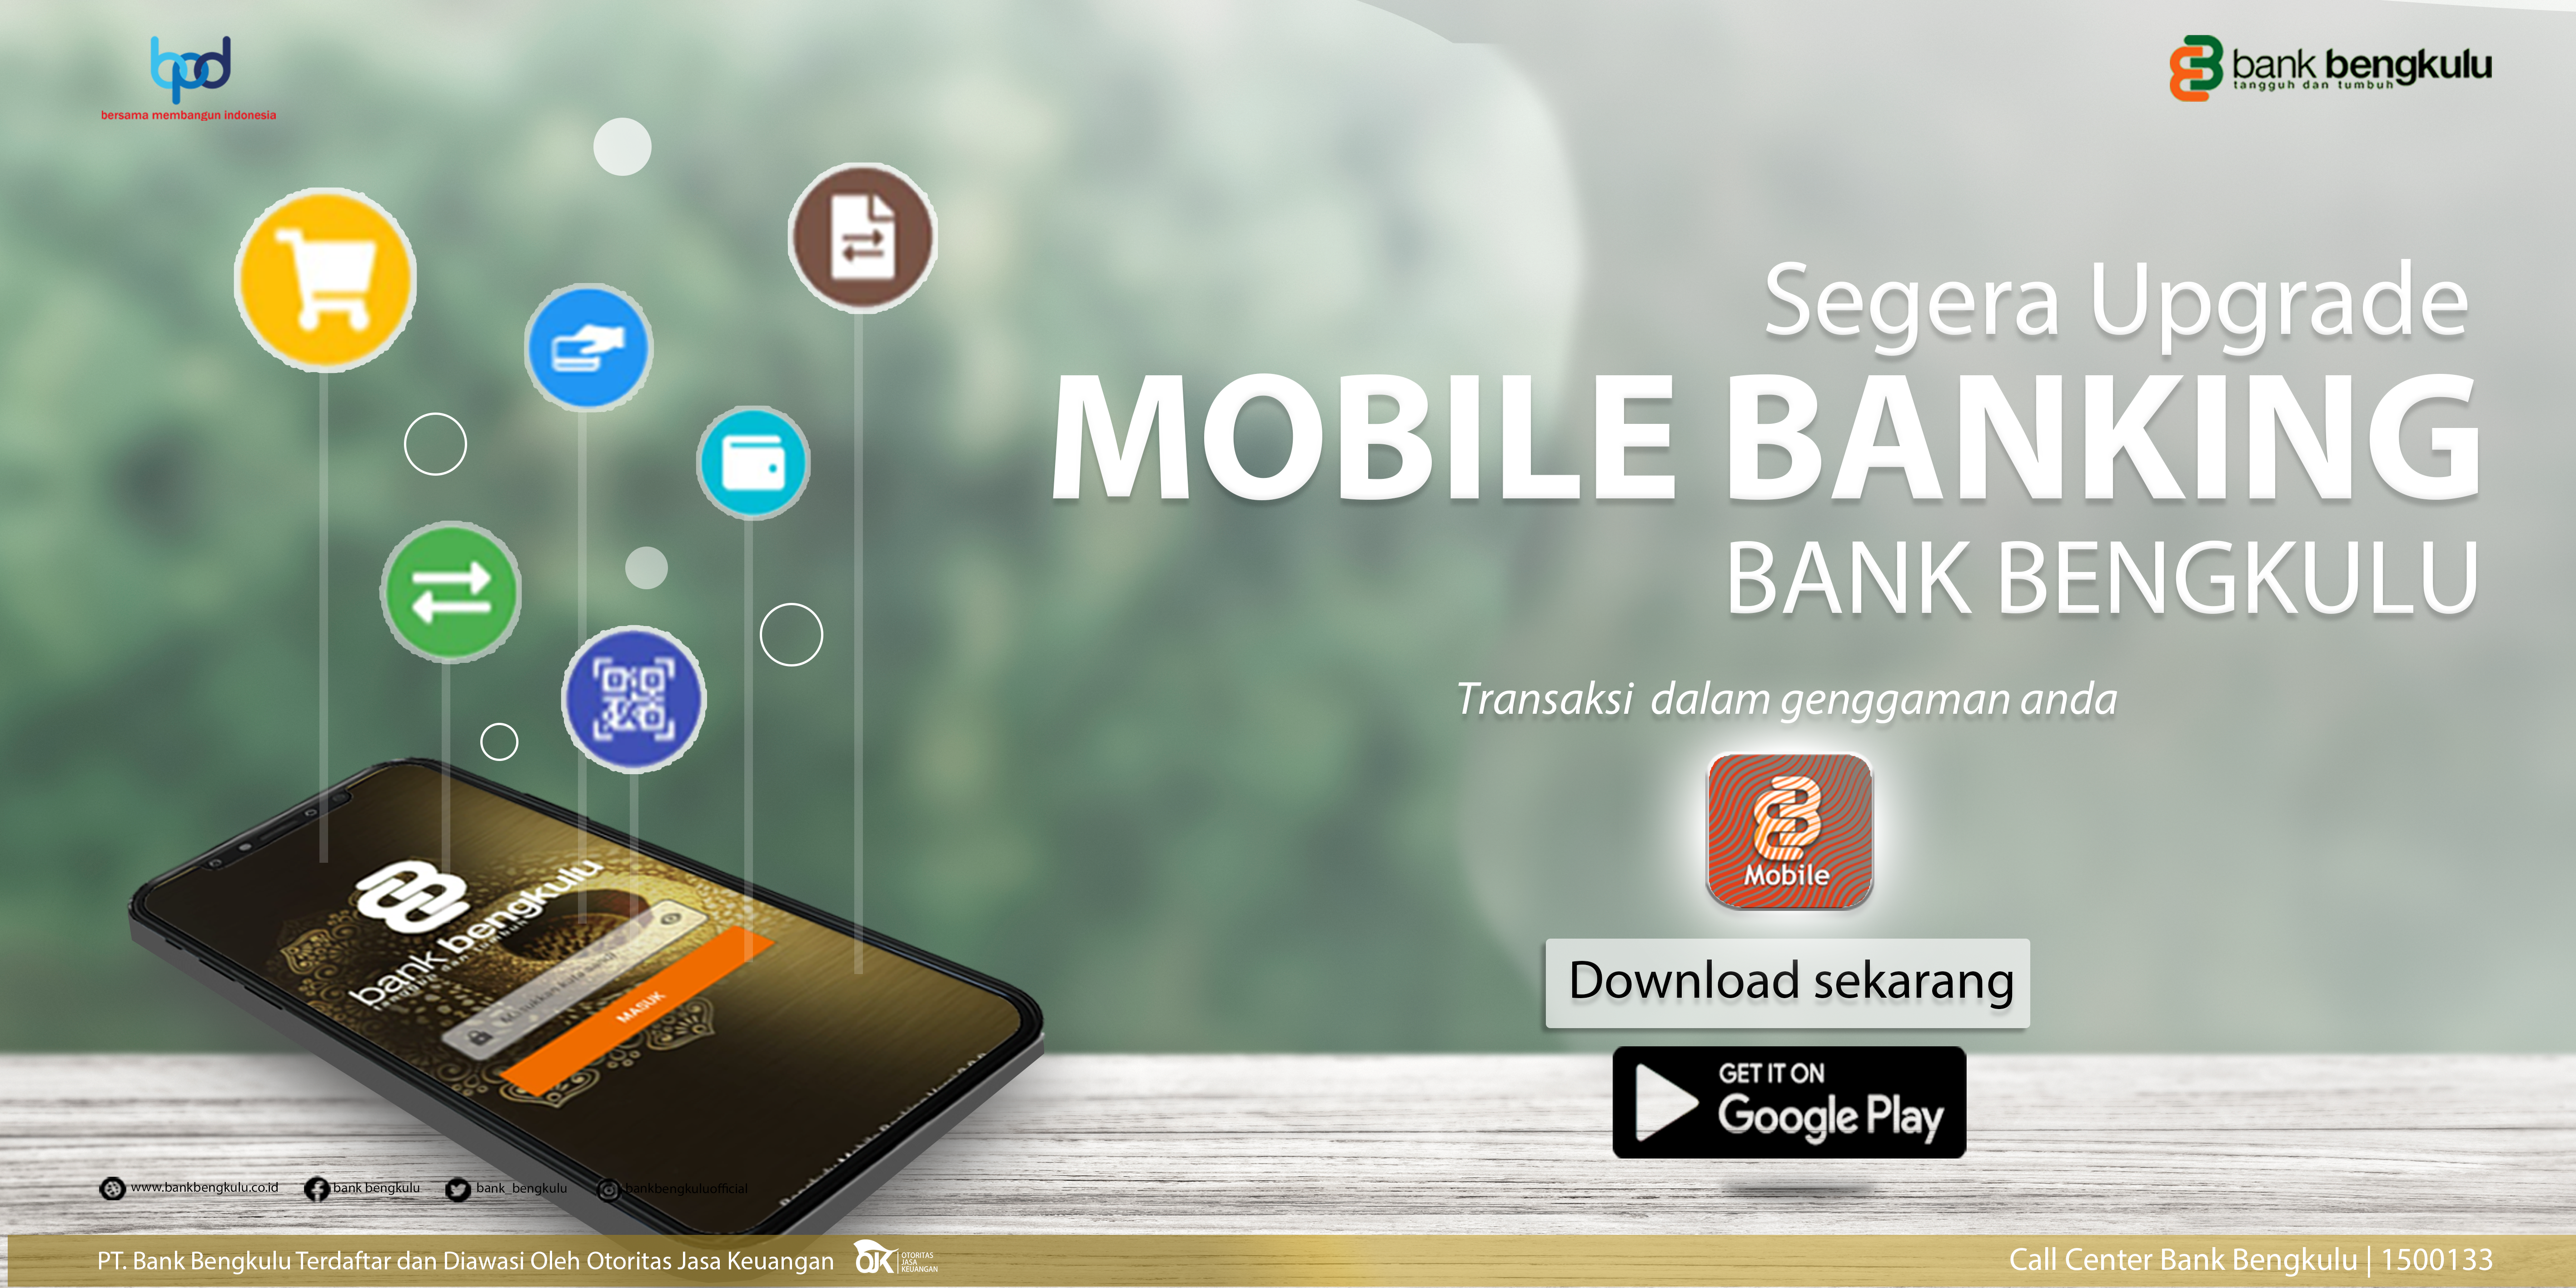 Mobile banking Bank Bengkulu